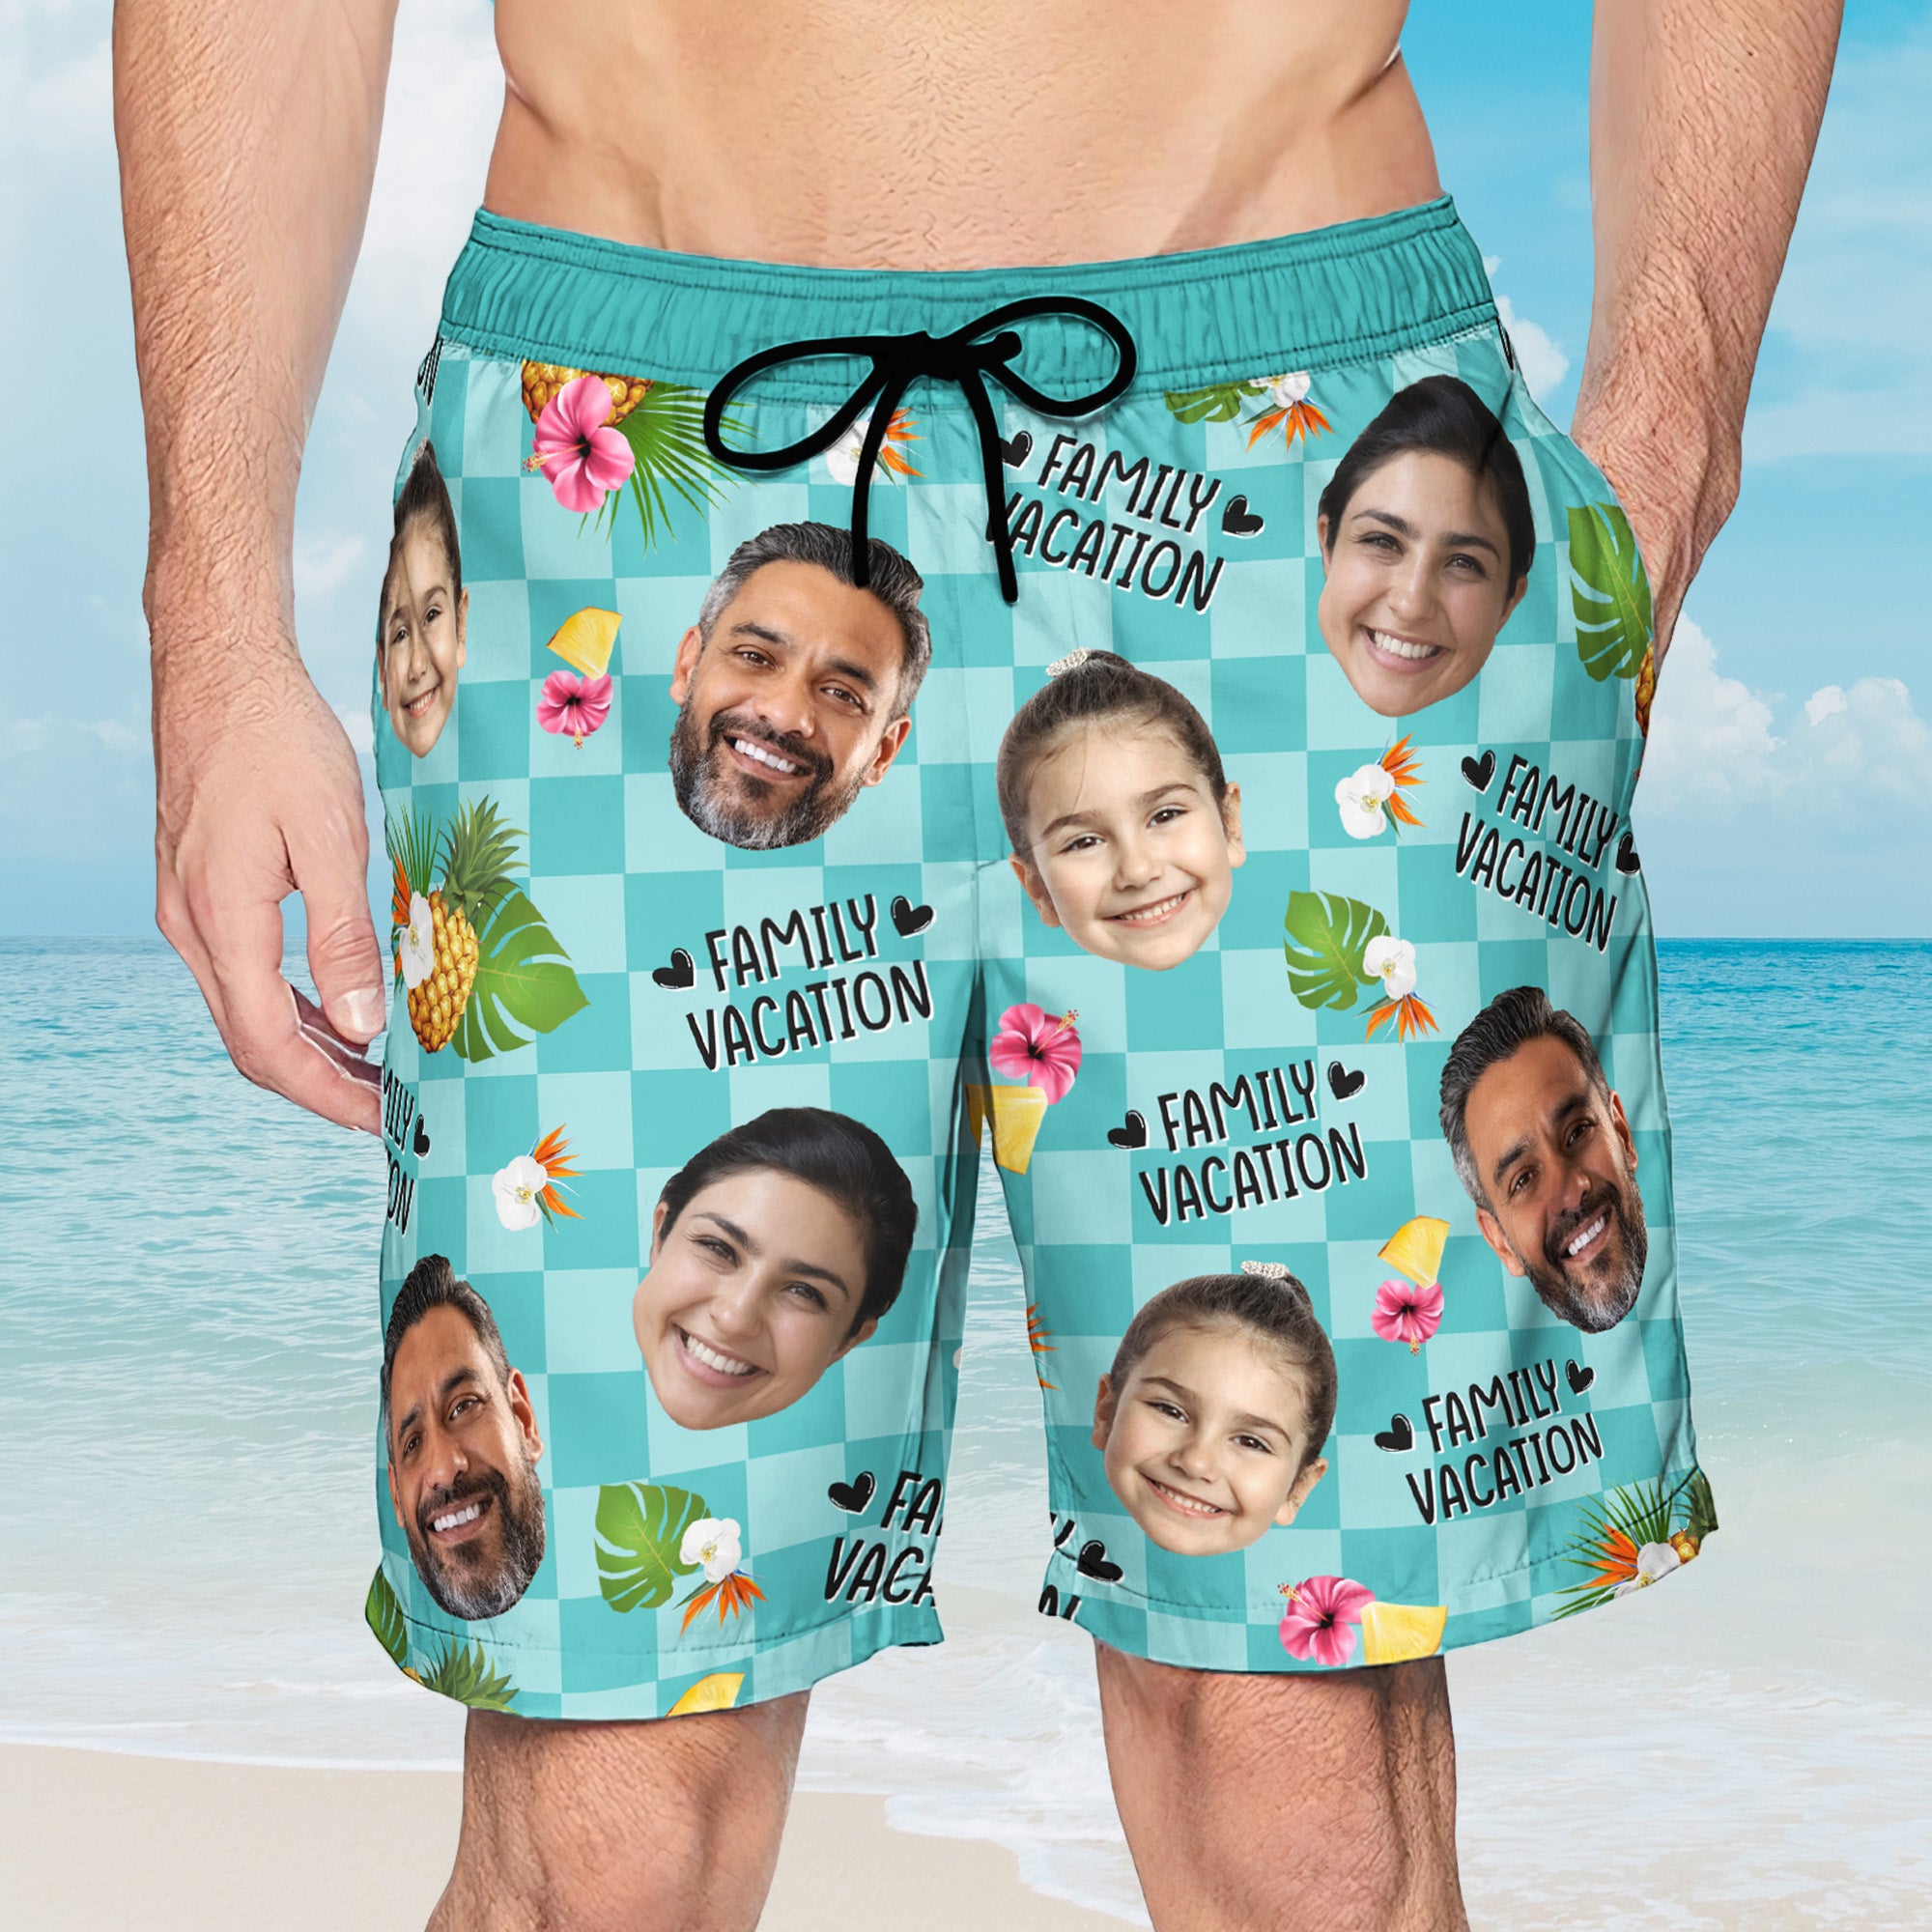 Family Vacation -  Personalized Photo Men's Beach Shorts